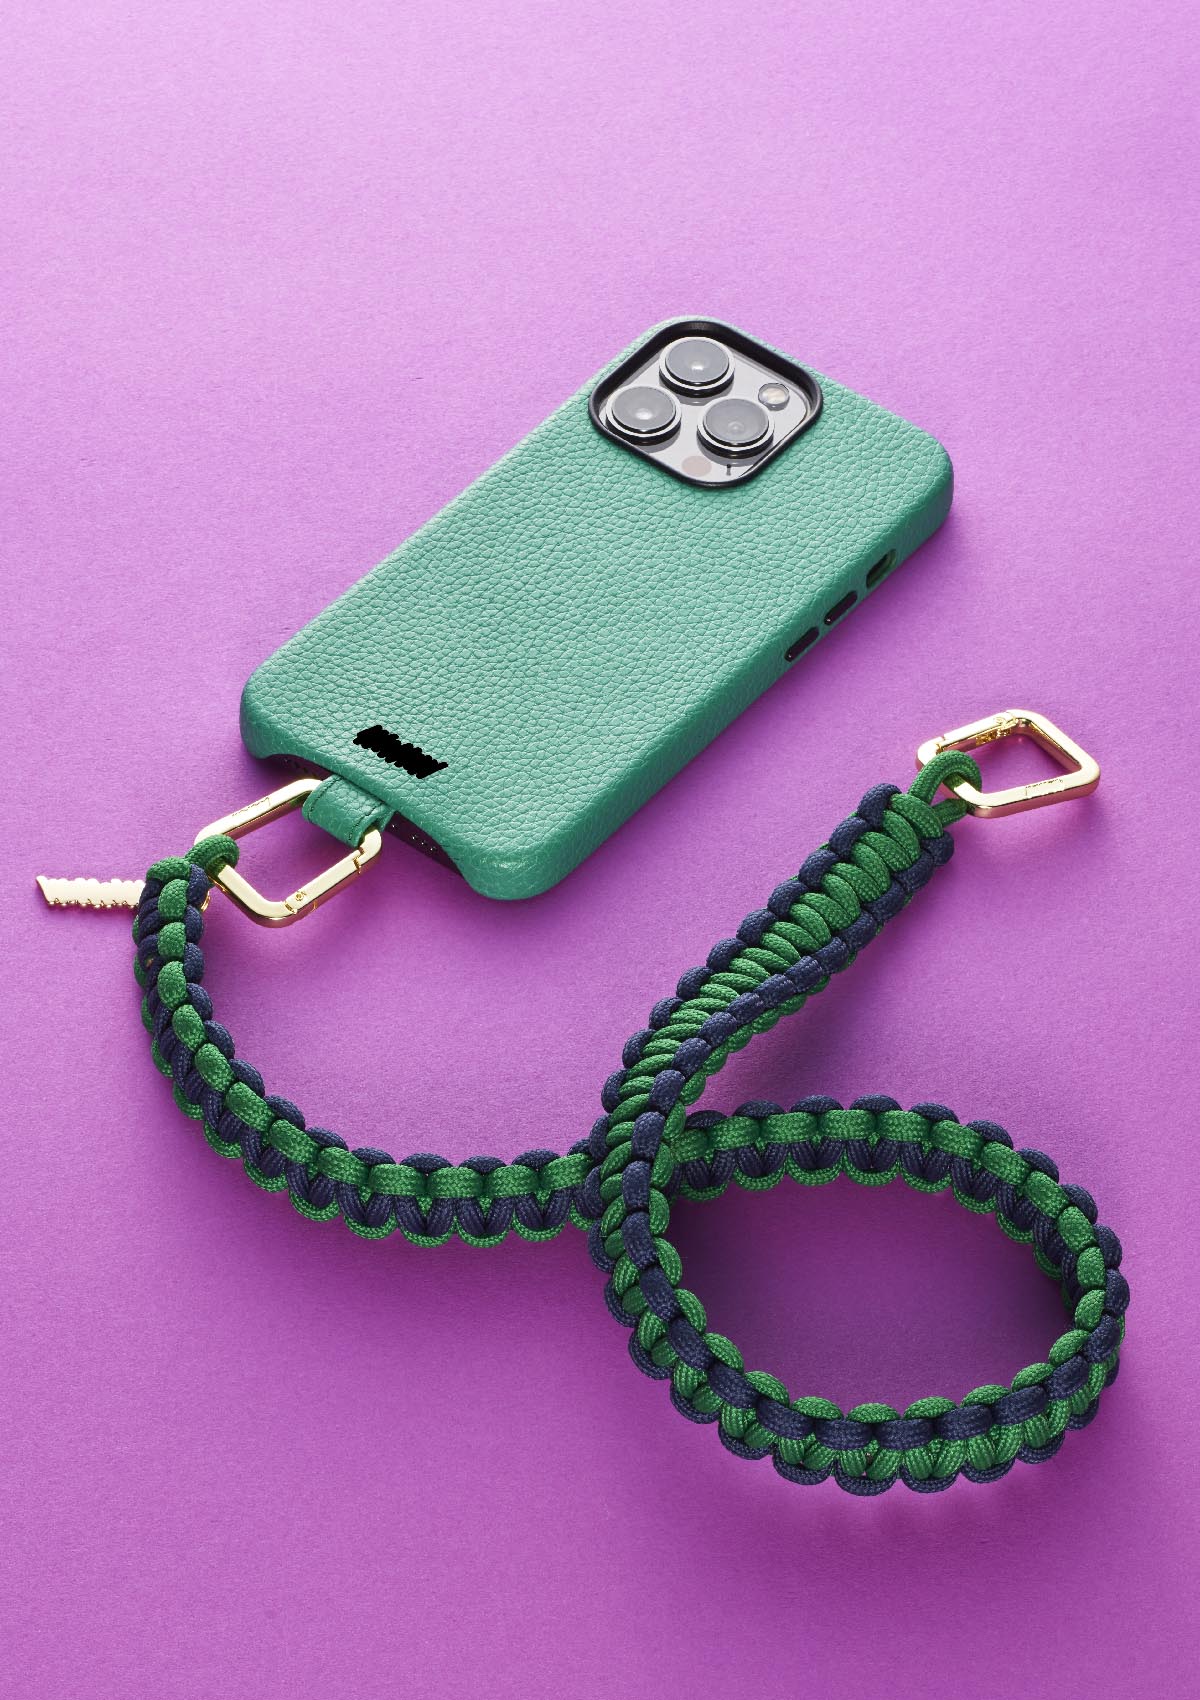 Scoubidou Phone Strap - green and blue

